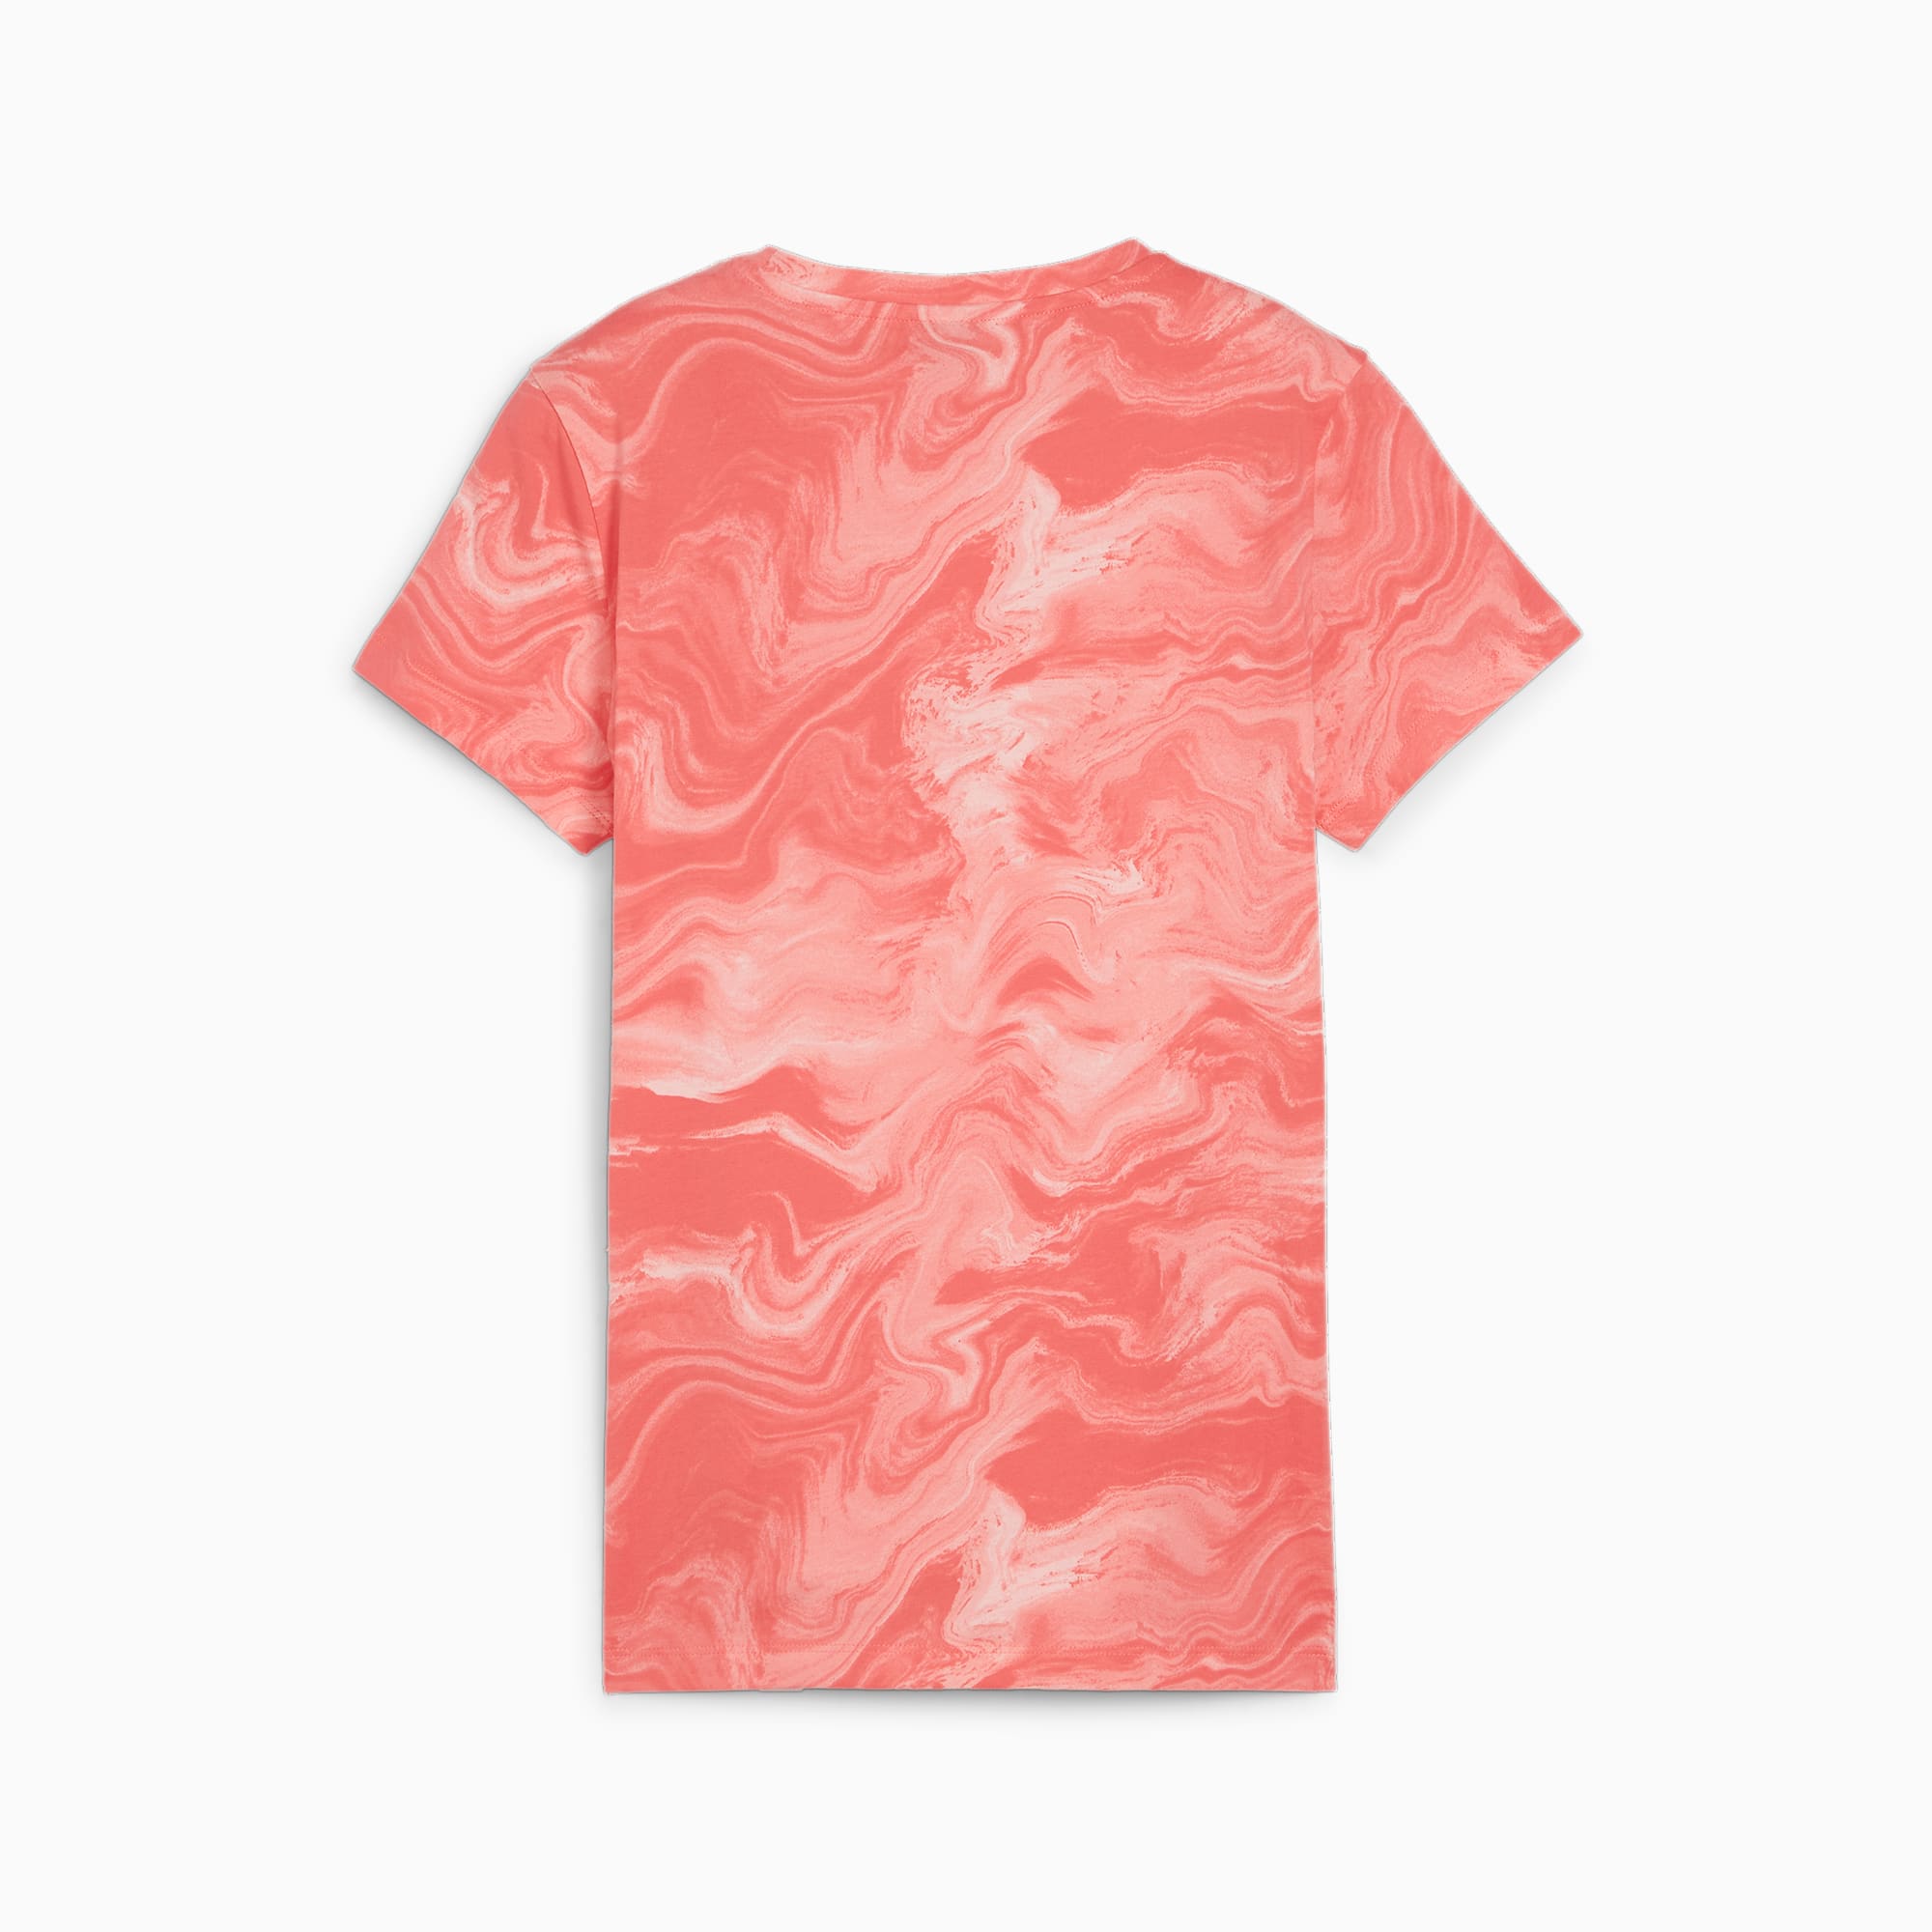 PUMA Ess+ Marbleized Women's T-Shirt, Peach Smoothie, Size L, Clothing